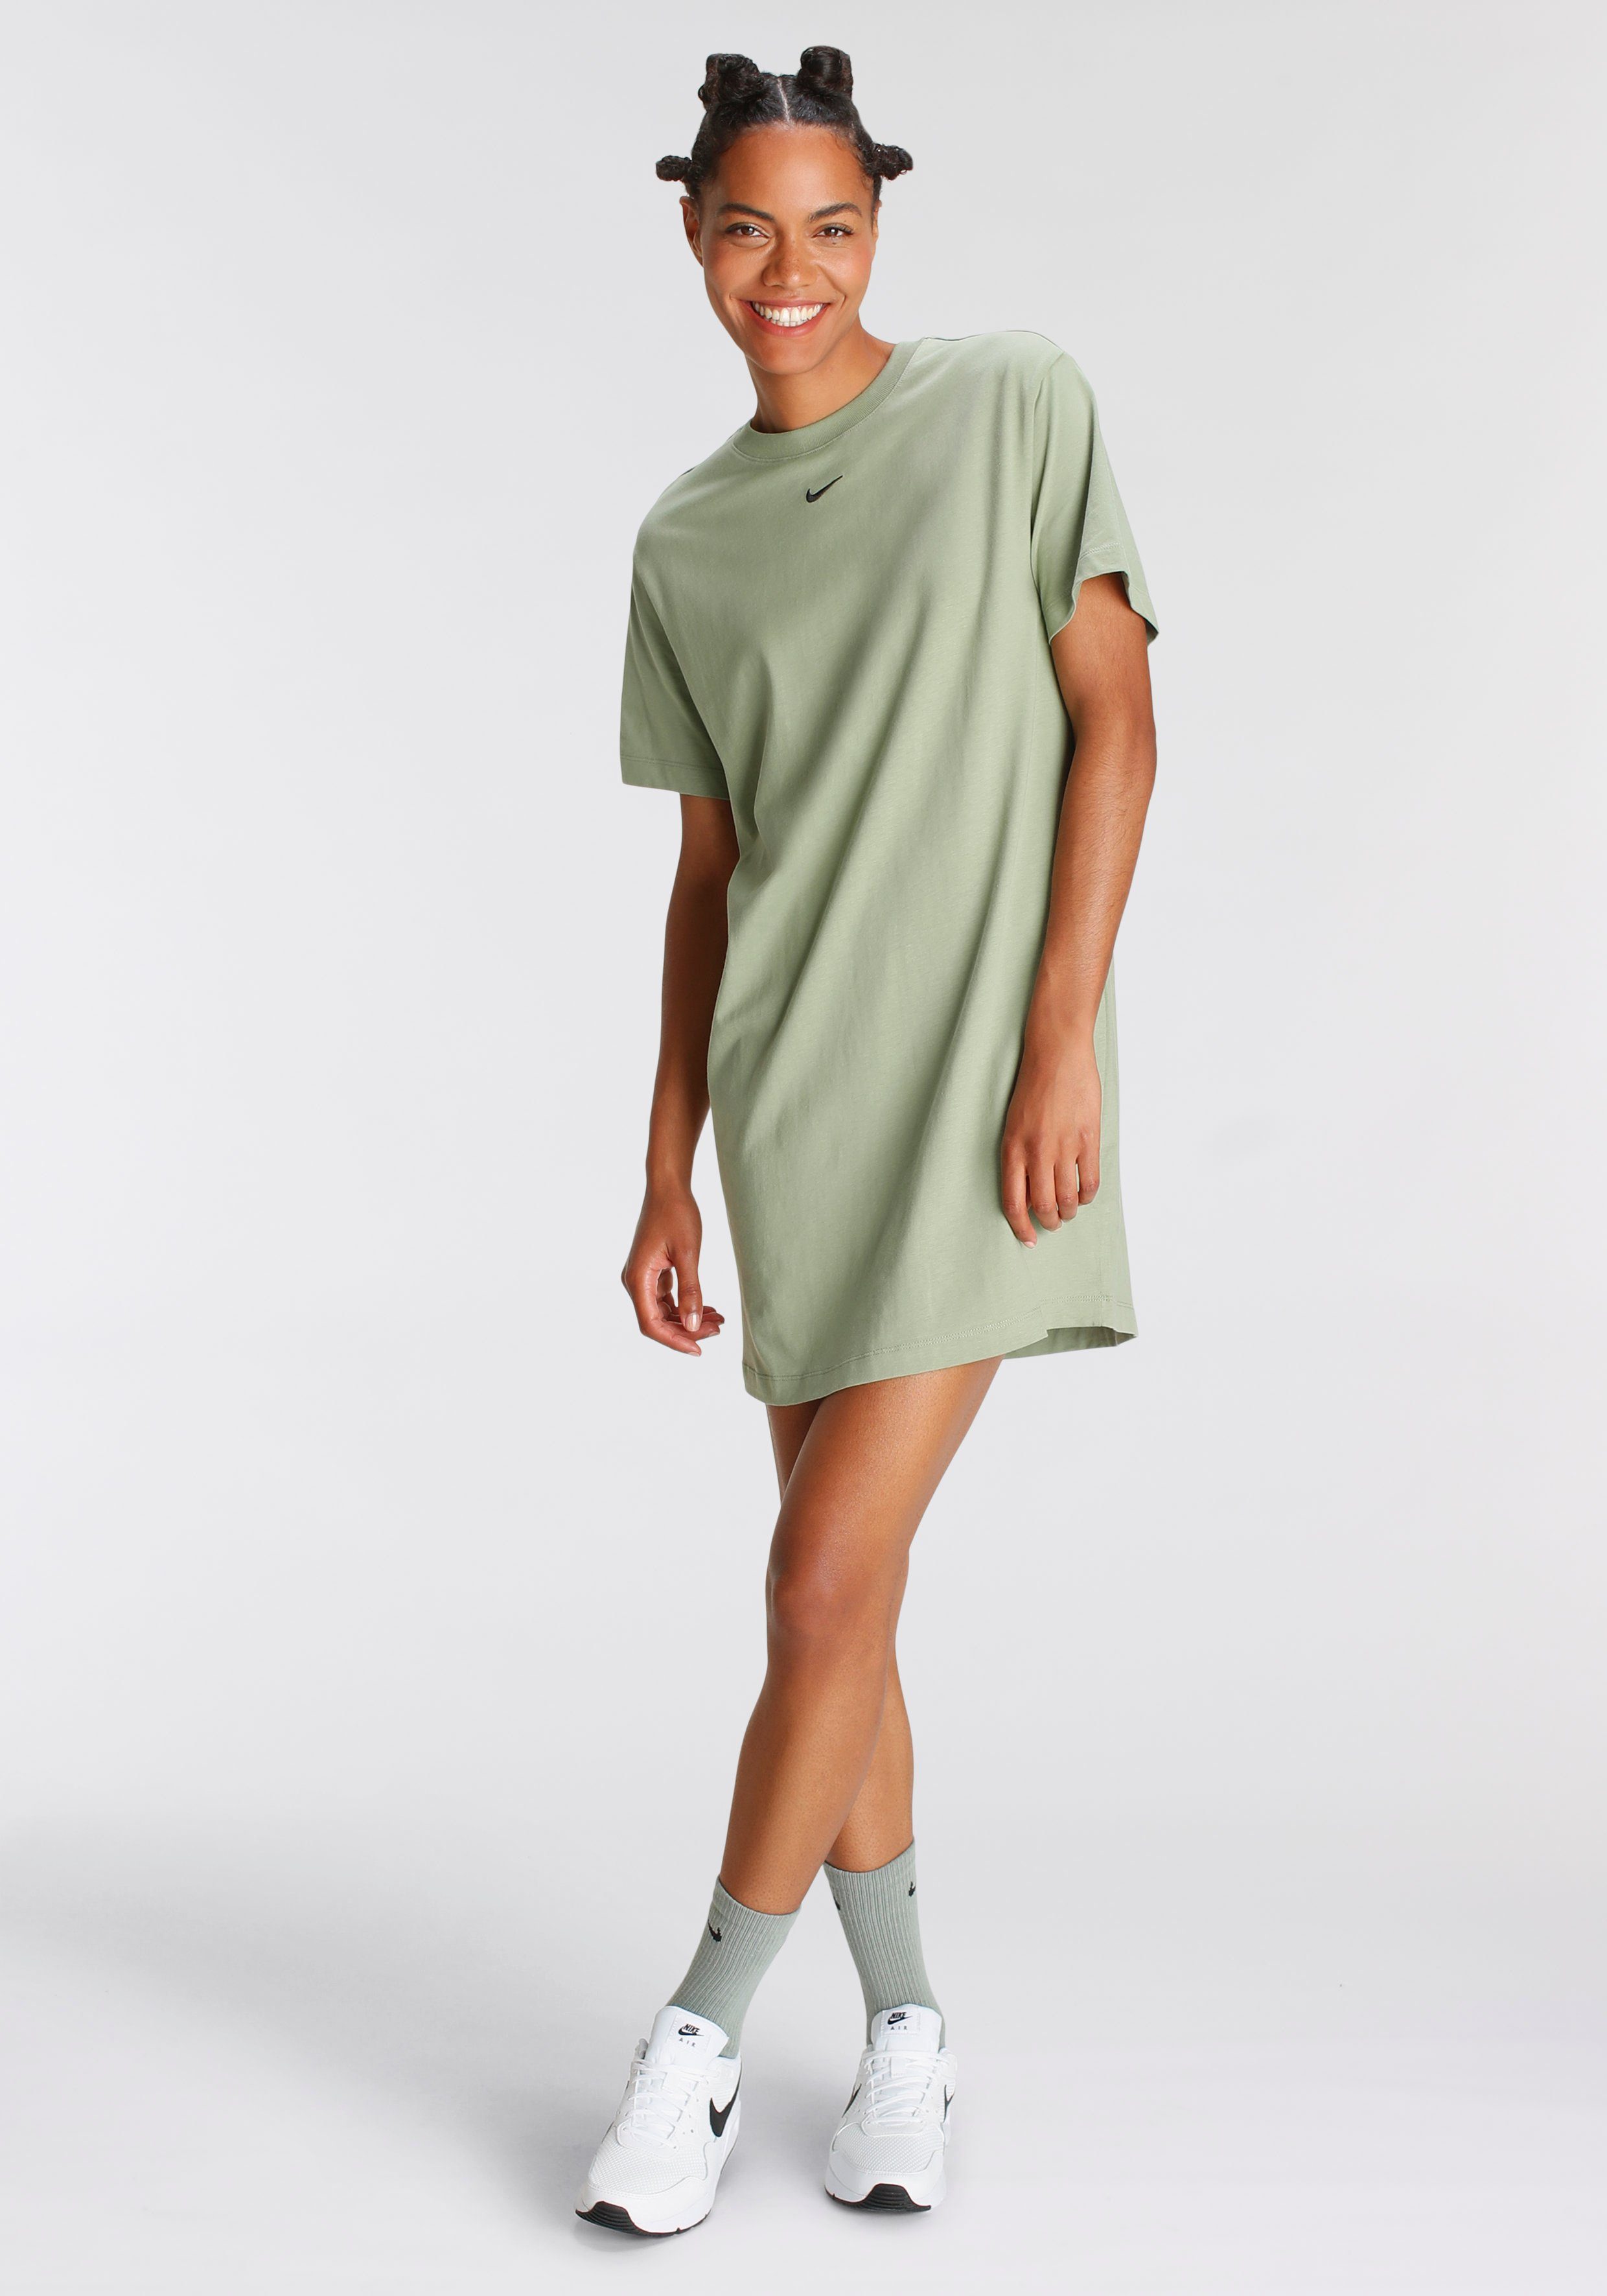 DRESS Sportswear GREEN/BLACK Nike SHORT-SLEEVE Sommerkleid ESSENTIAL OIL WOMEN'S